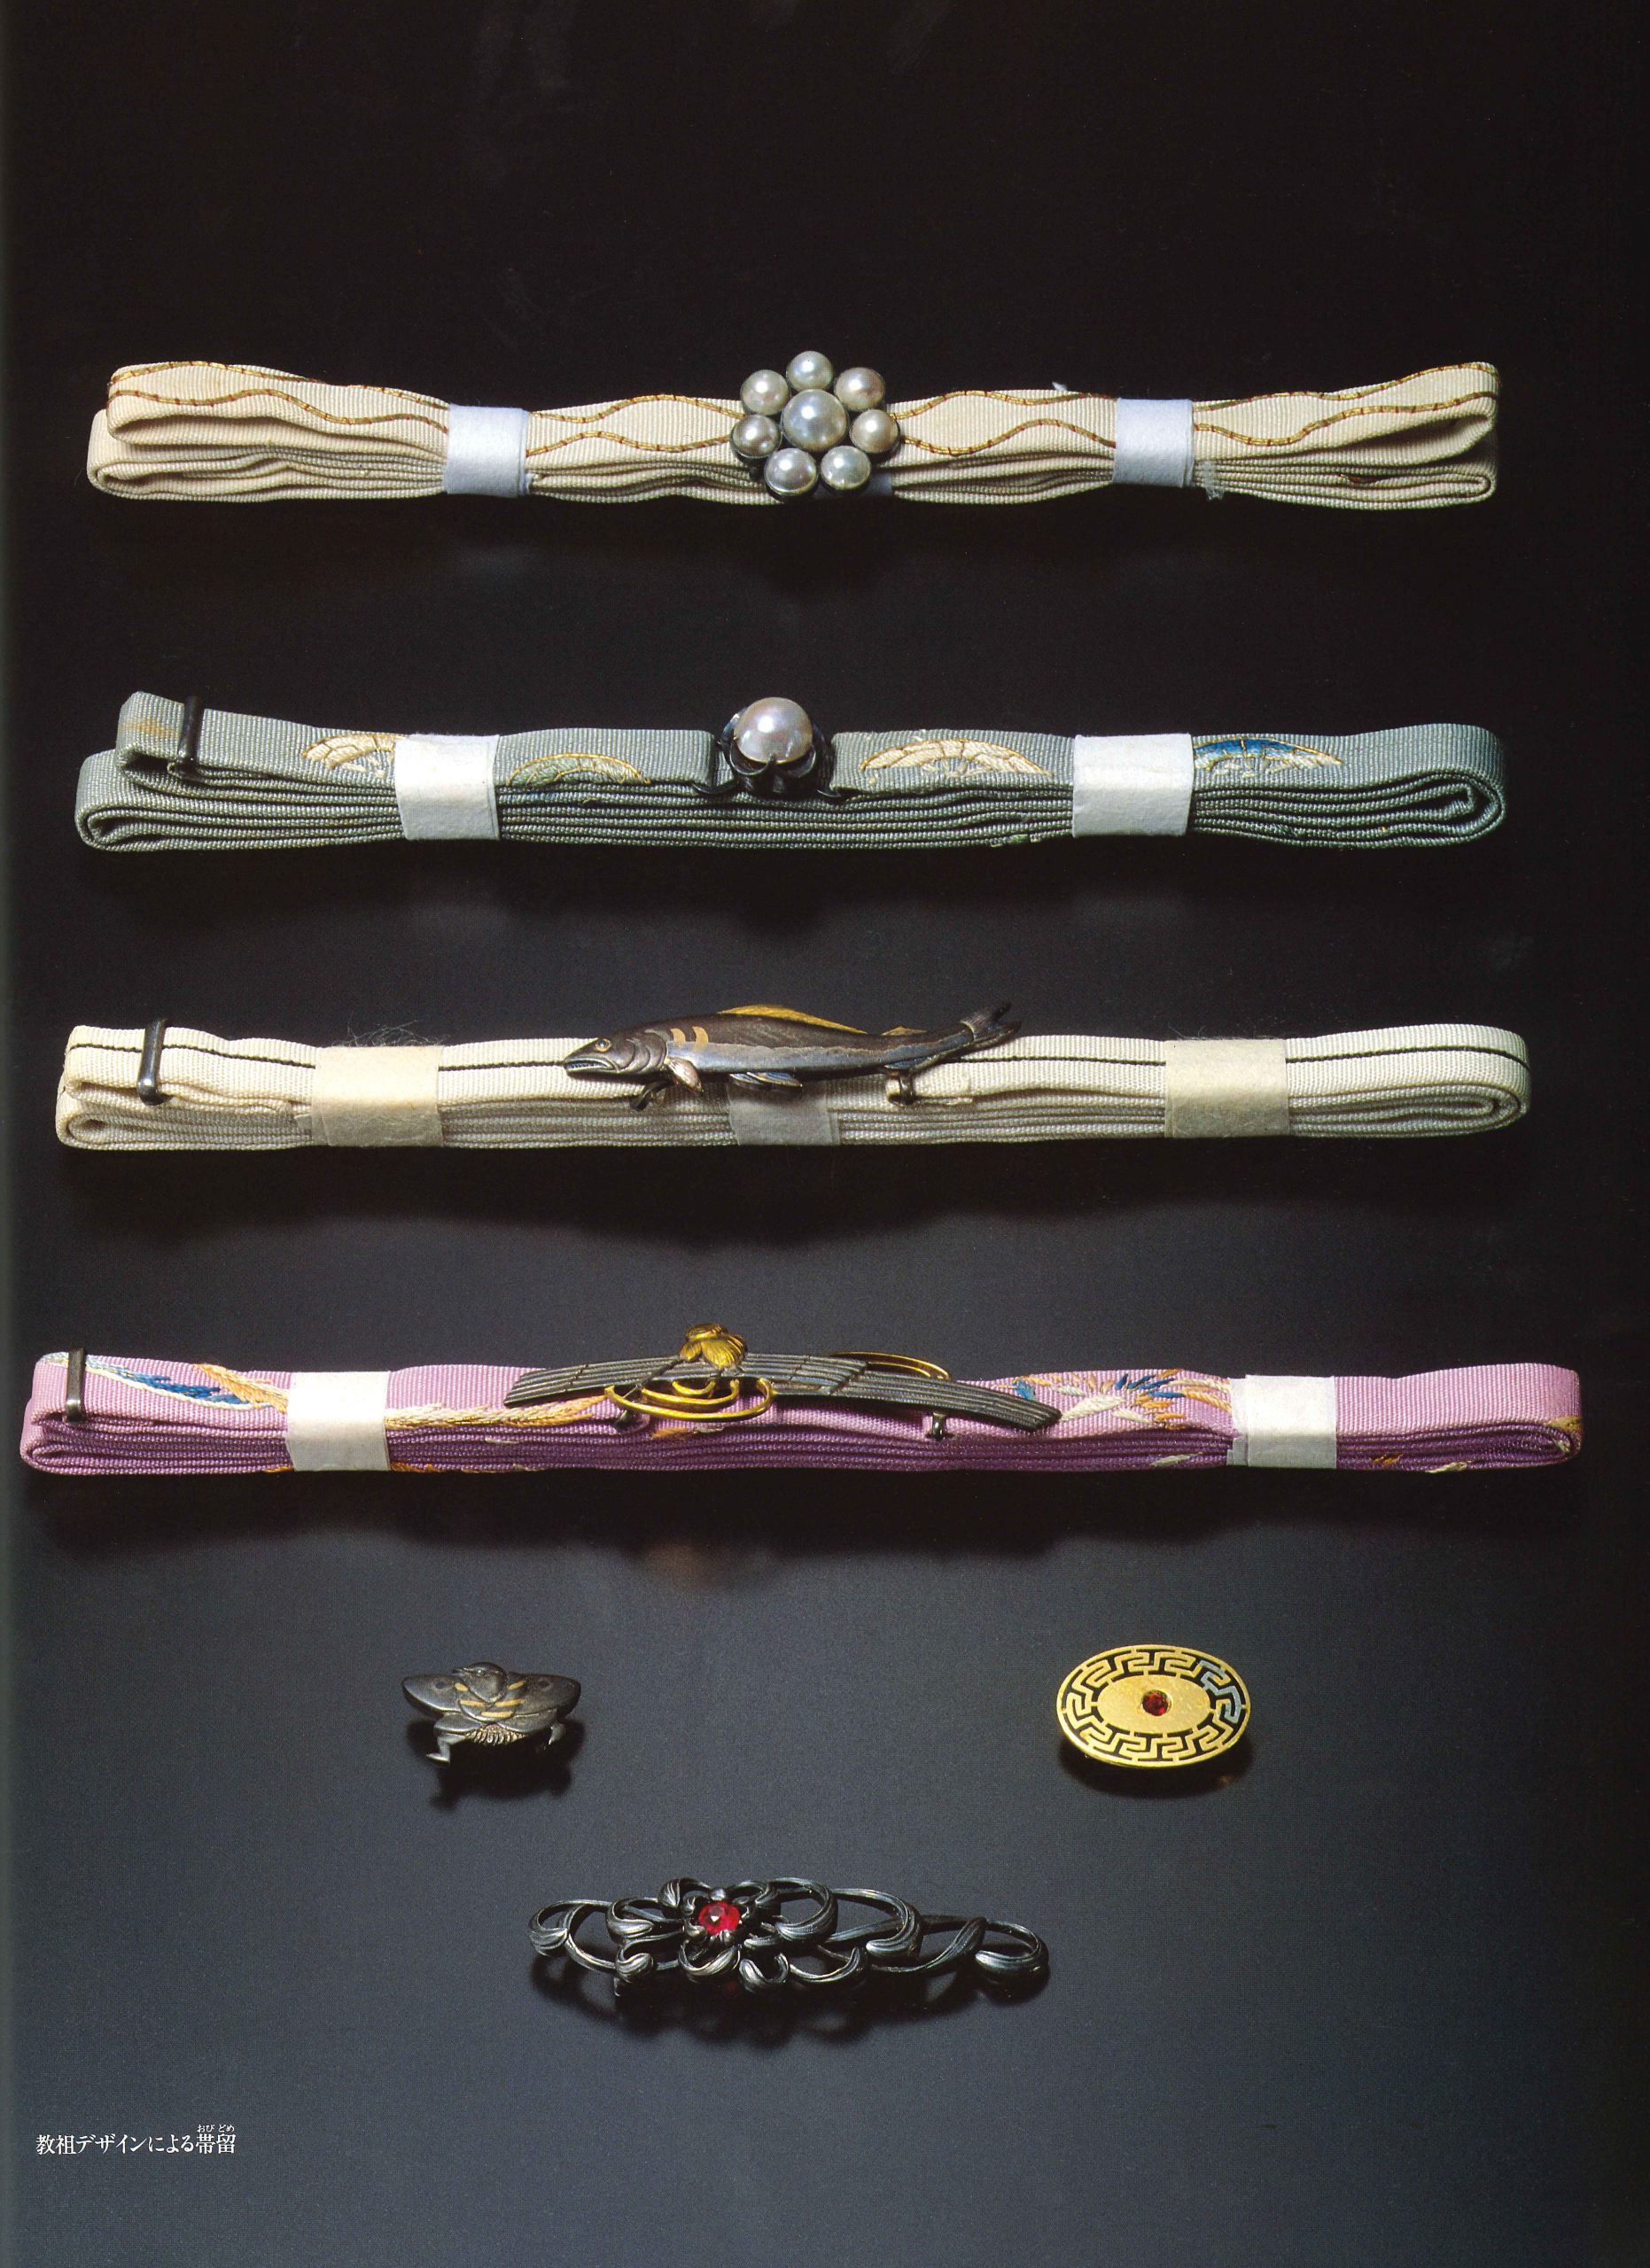 Obidome (sash band) designed by Okada